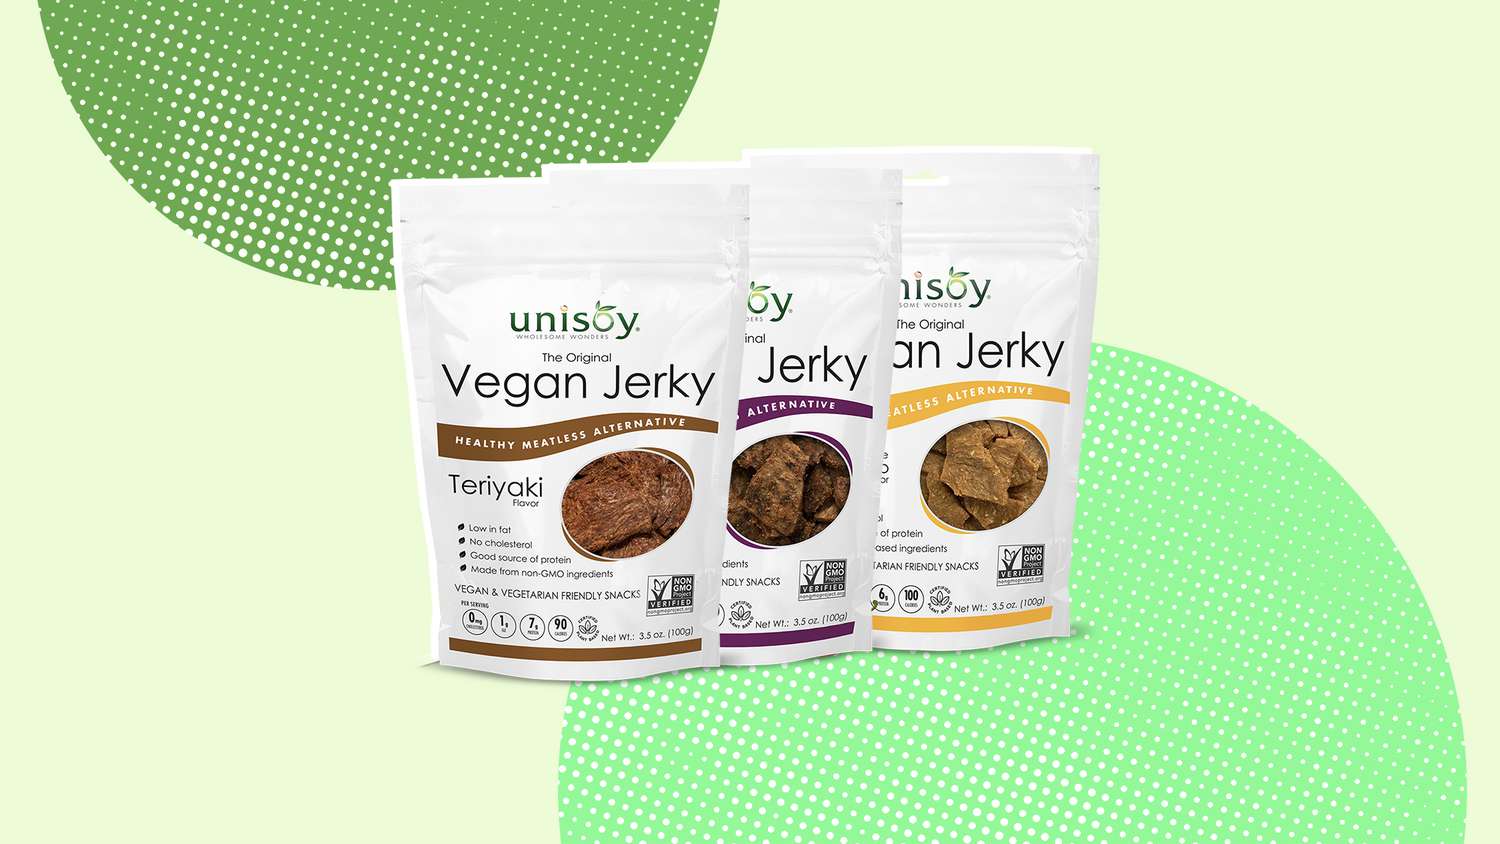 3 bags of Unisoy Smoky Vegan Jerky